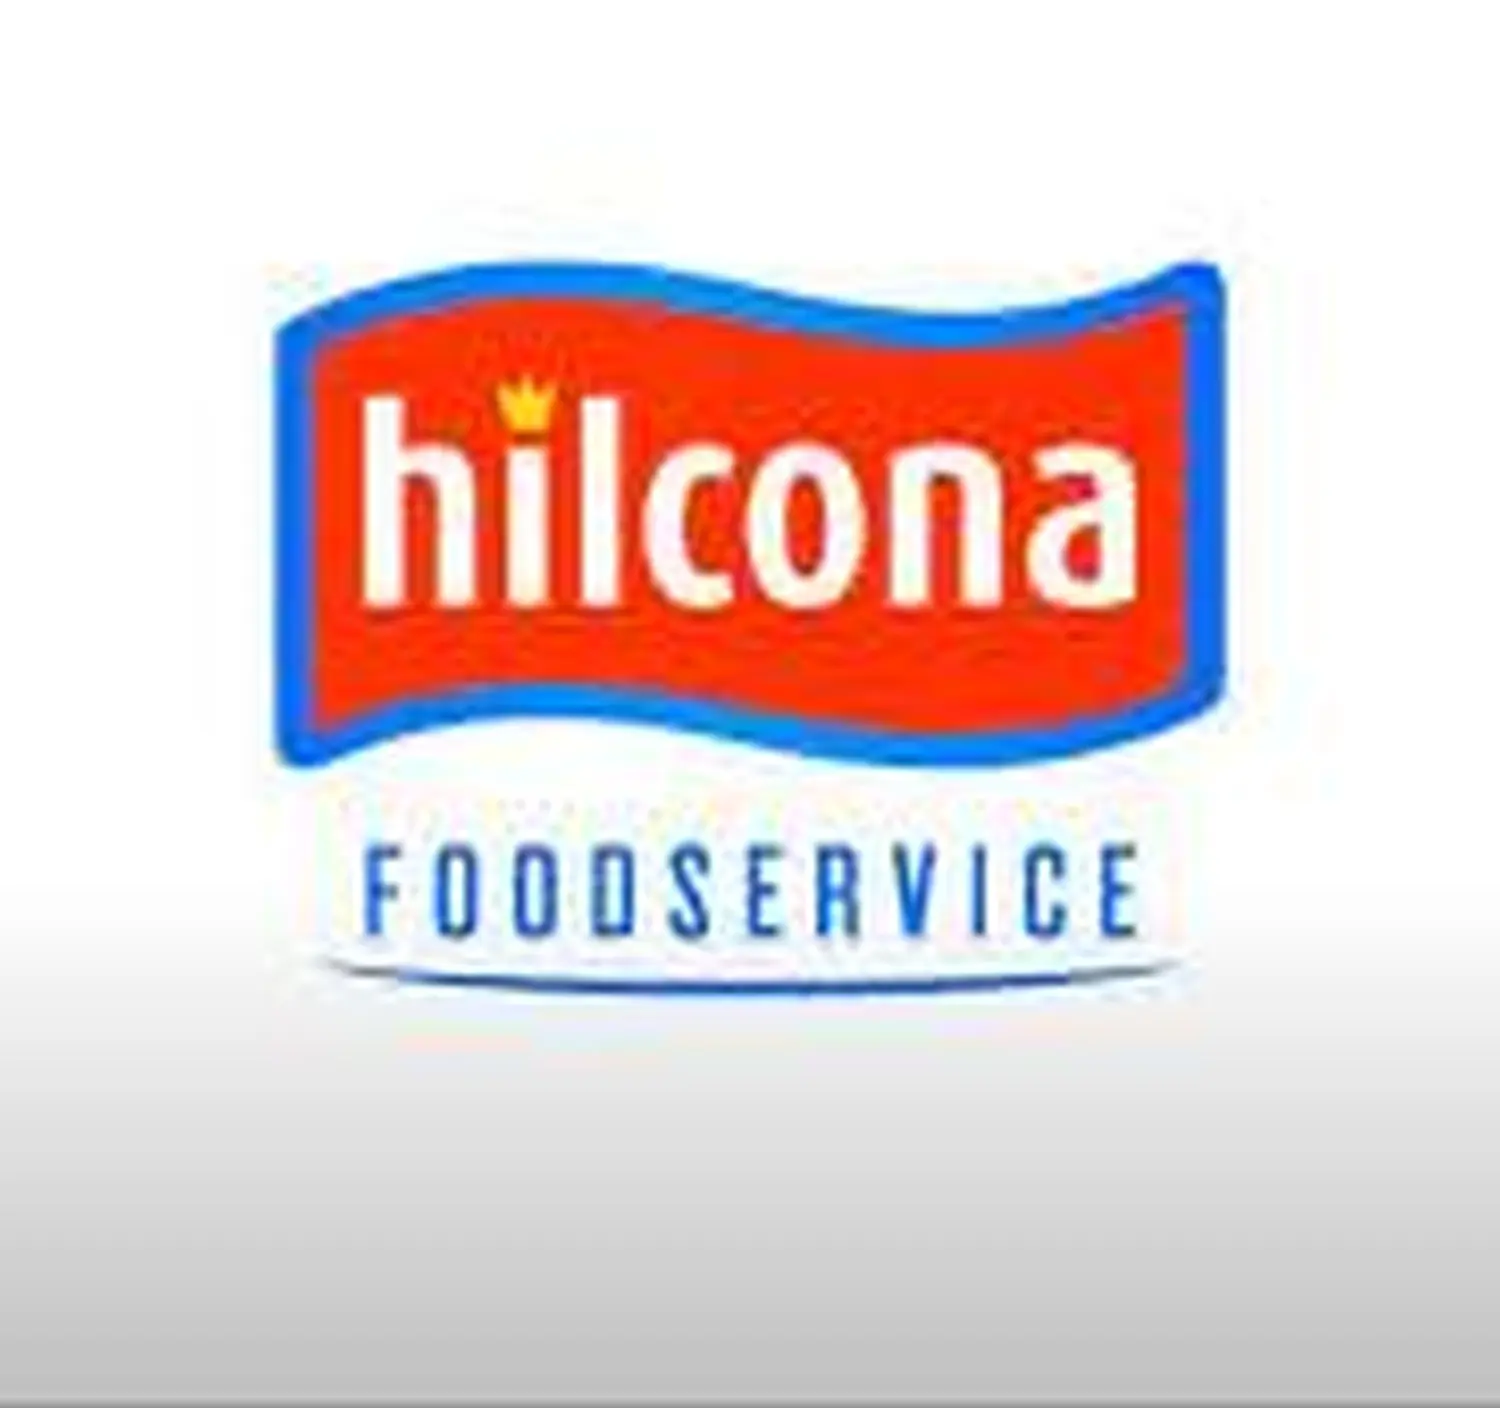 hilcona logo